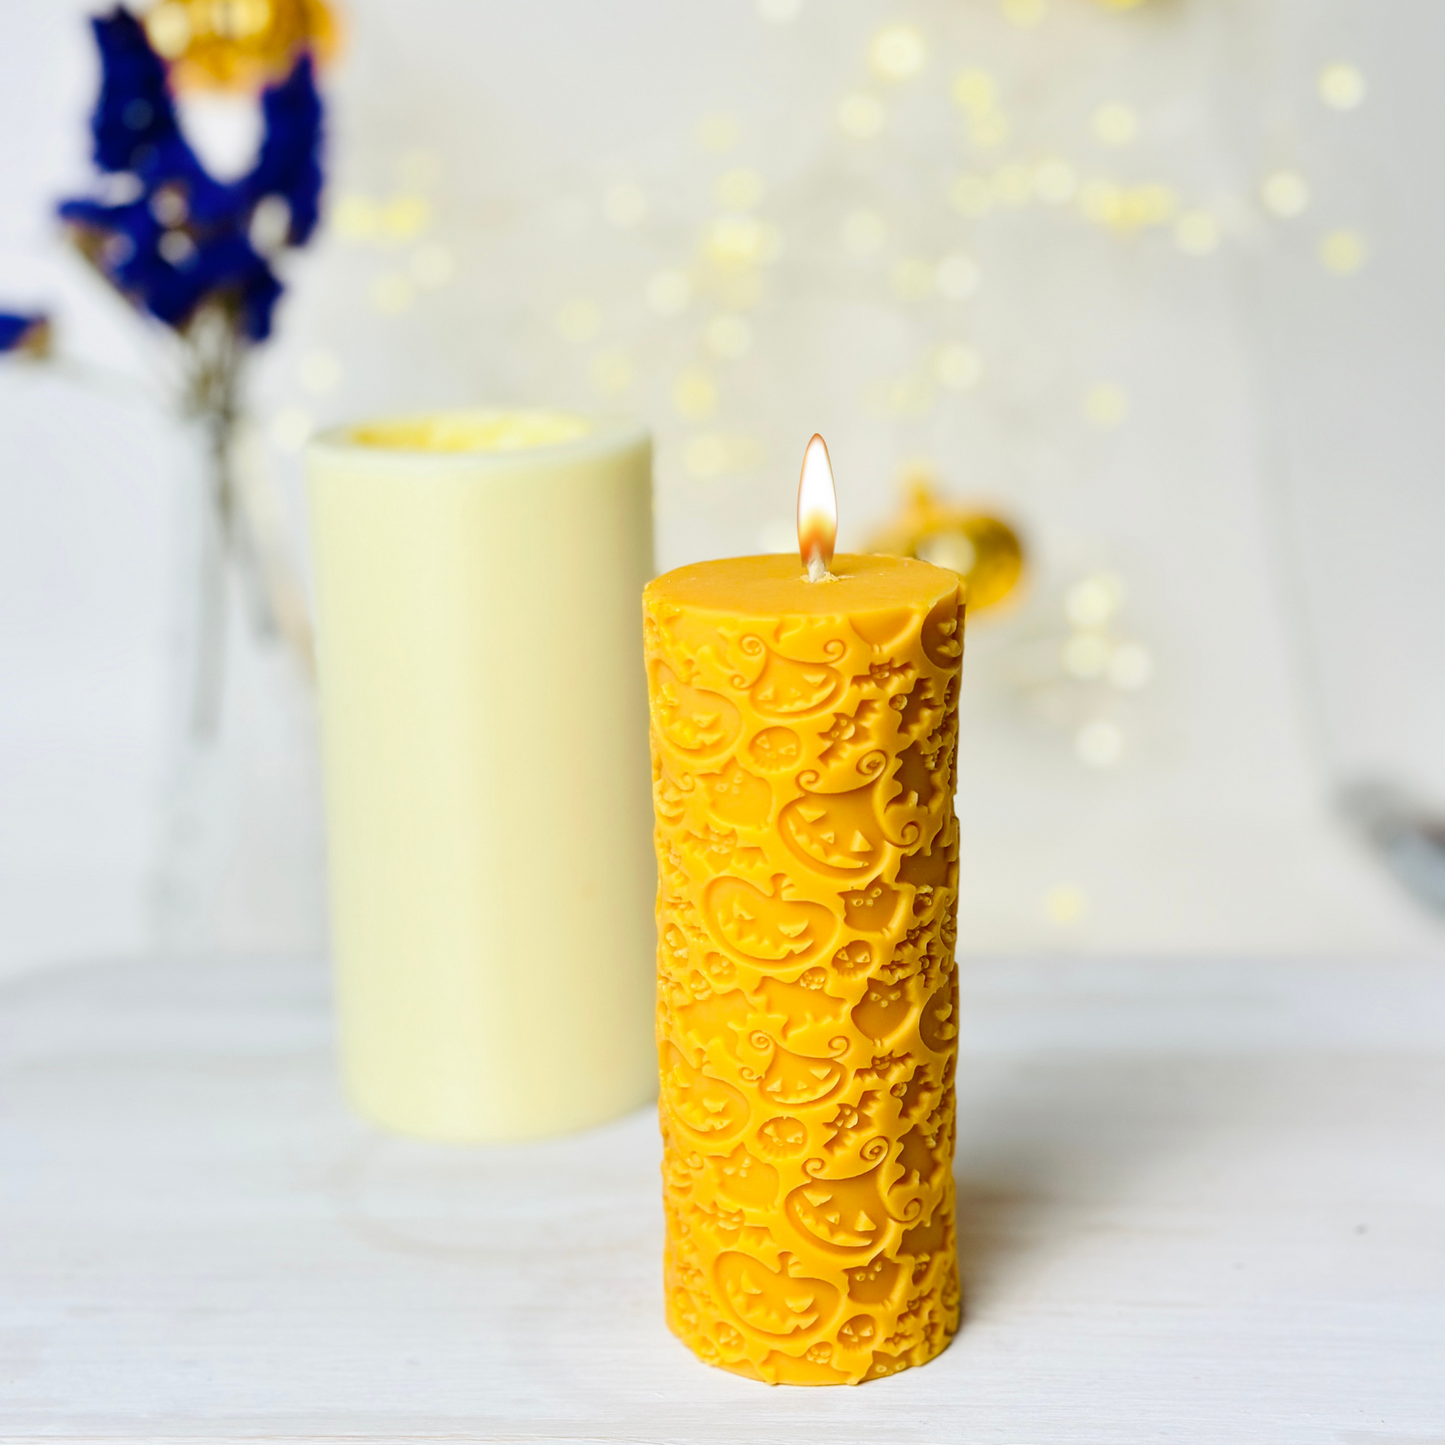 Premium Silicone Candle Mold - Jack-o-Lantern & Bat Design | Create Unique Shaped Candles for Halloween